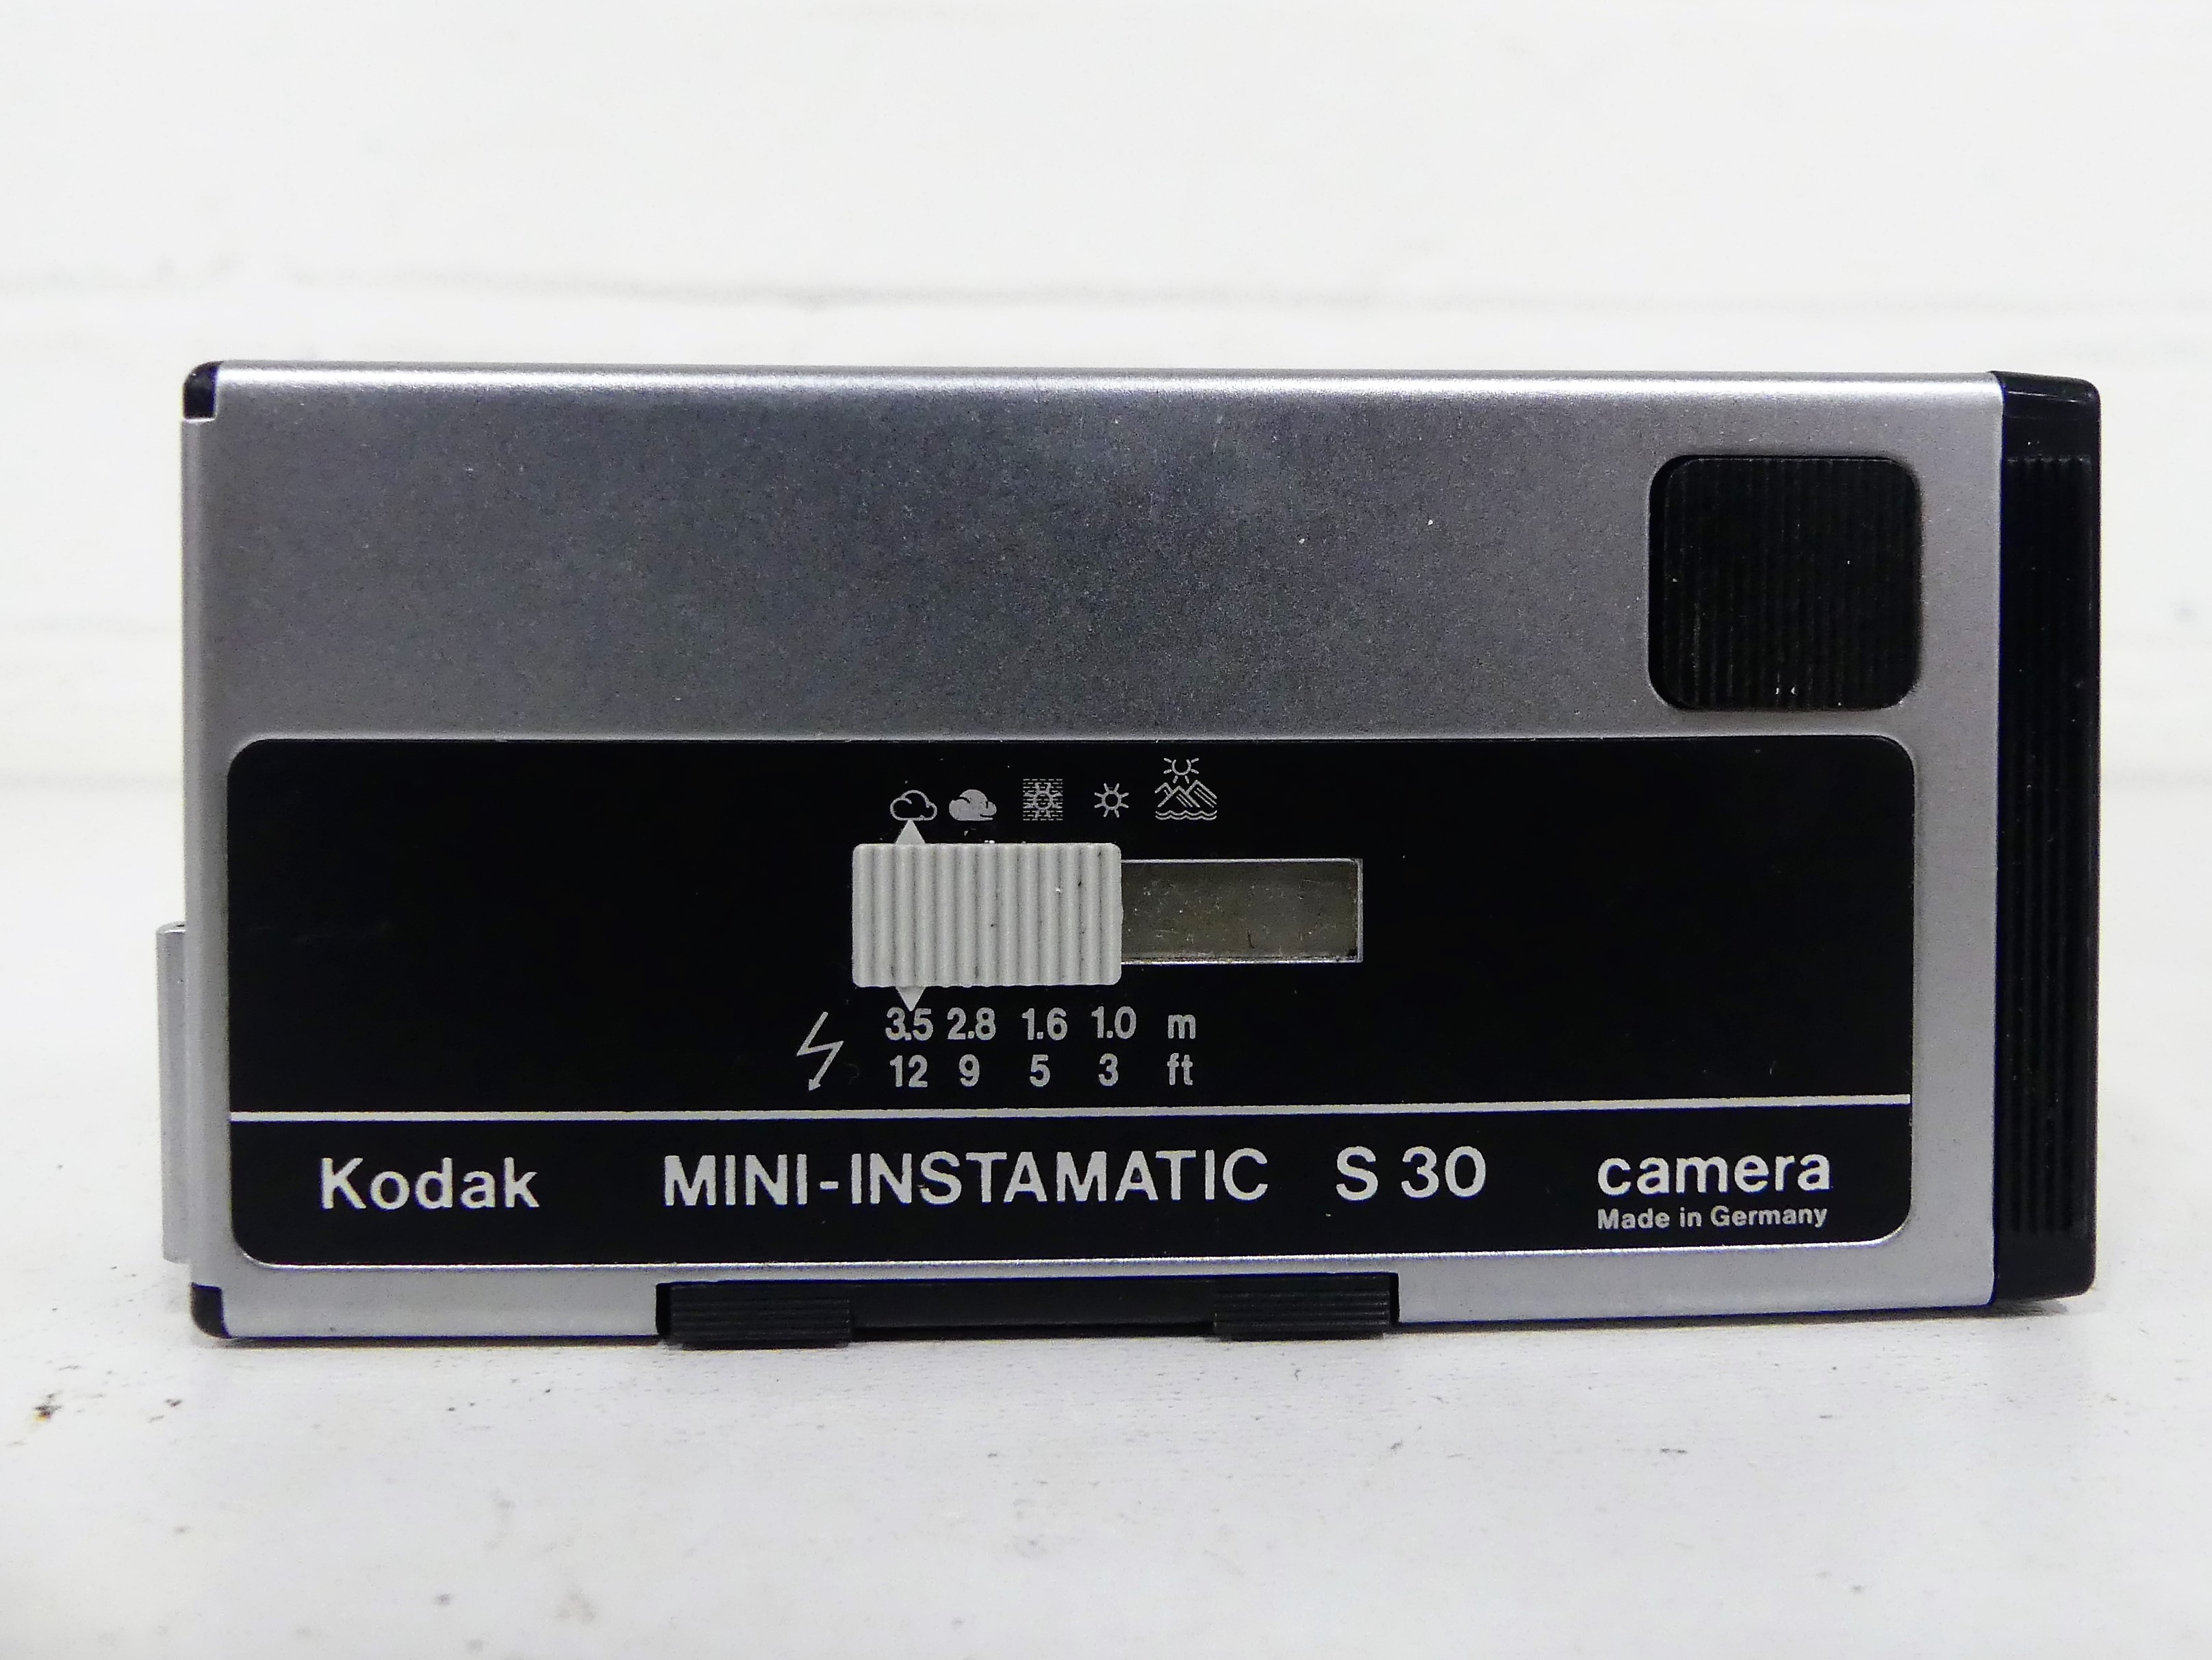 Kodak pocketcamera Mini-Instamatic S 30, 1975